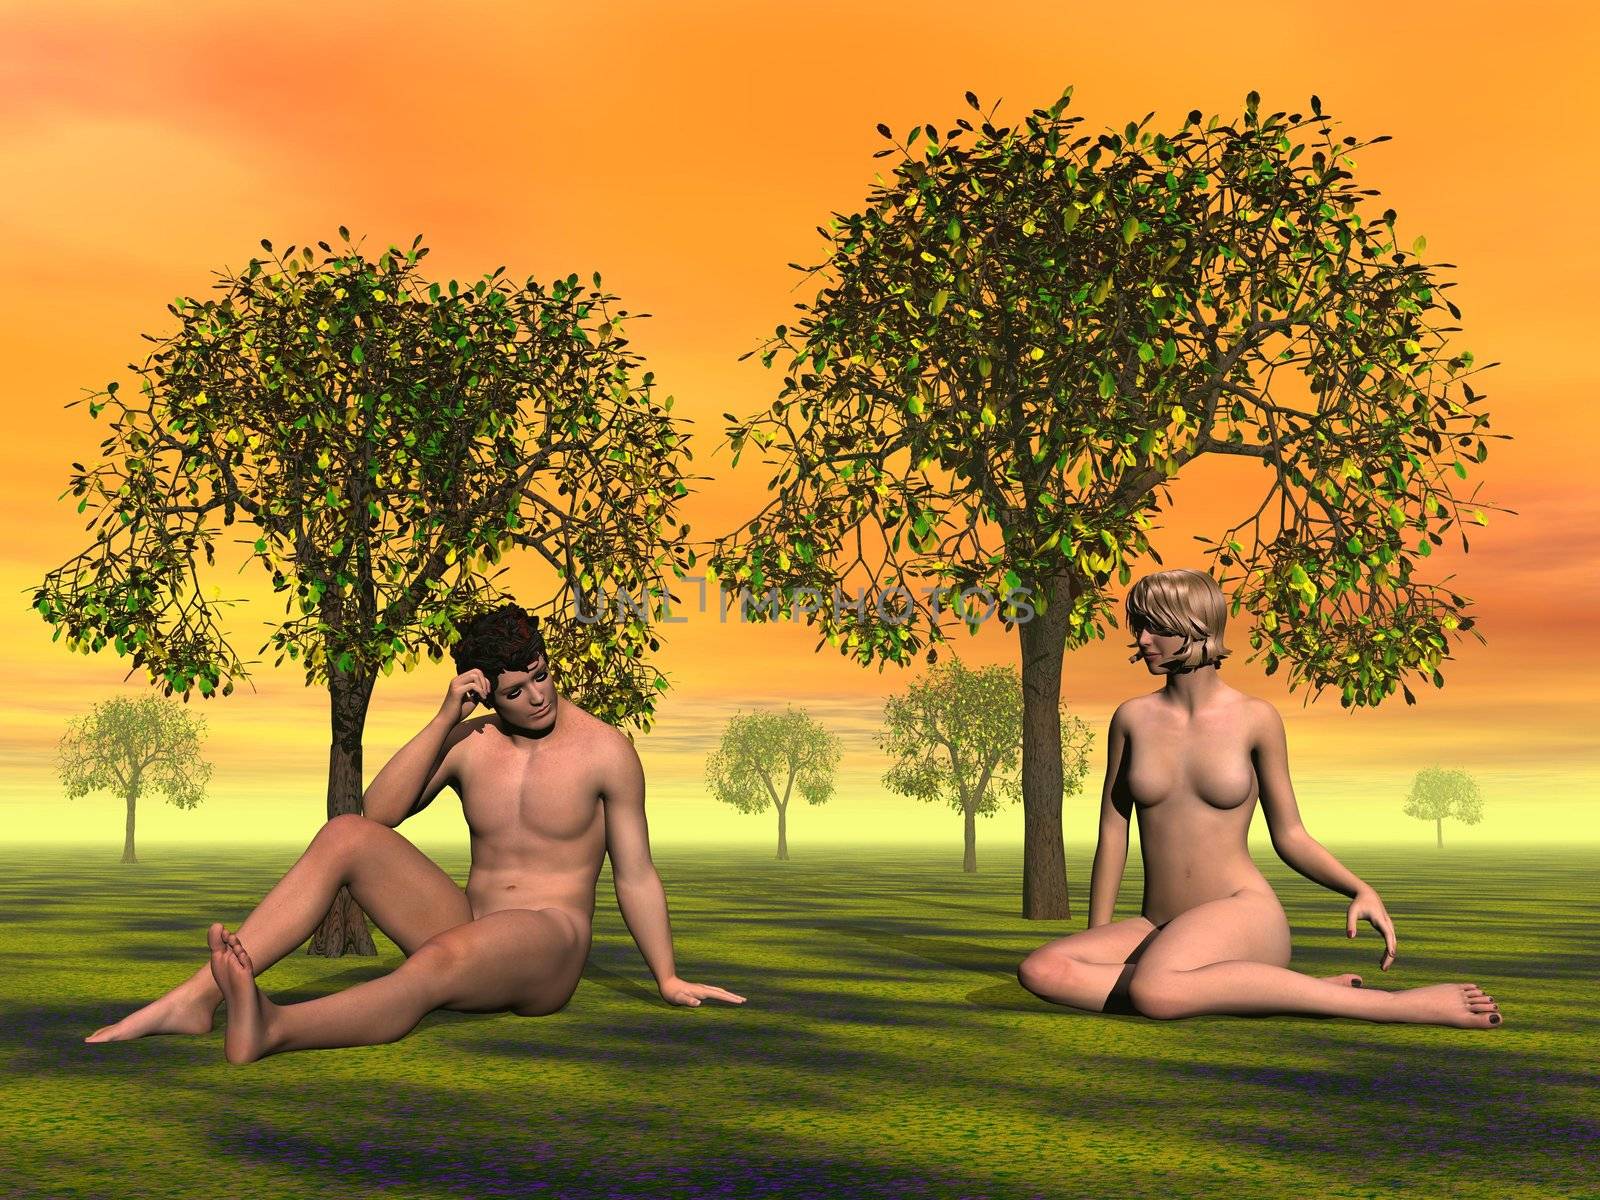 Adam and Eve by Elenaphotos21